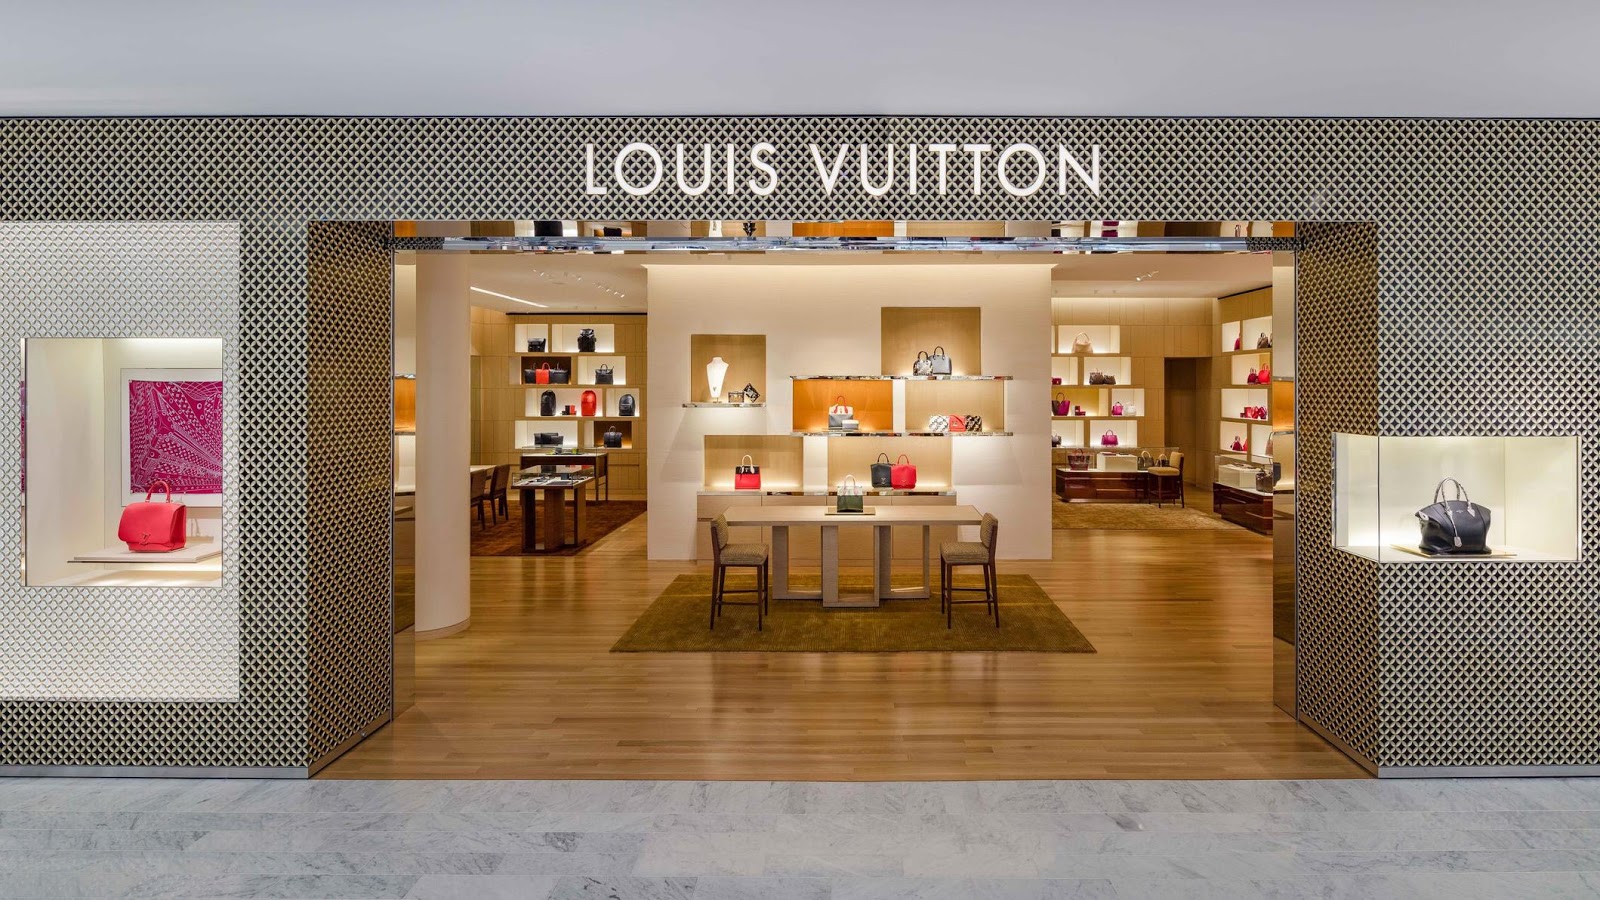 Photo of Louis Vuitton Garden City Roosevelt Field Neiman Marcus in Garden City, New York, United States - 1 Picture of Point of interest, Establishment, Store